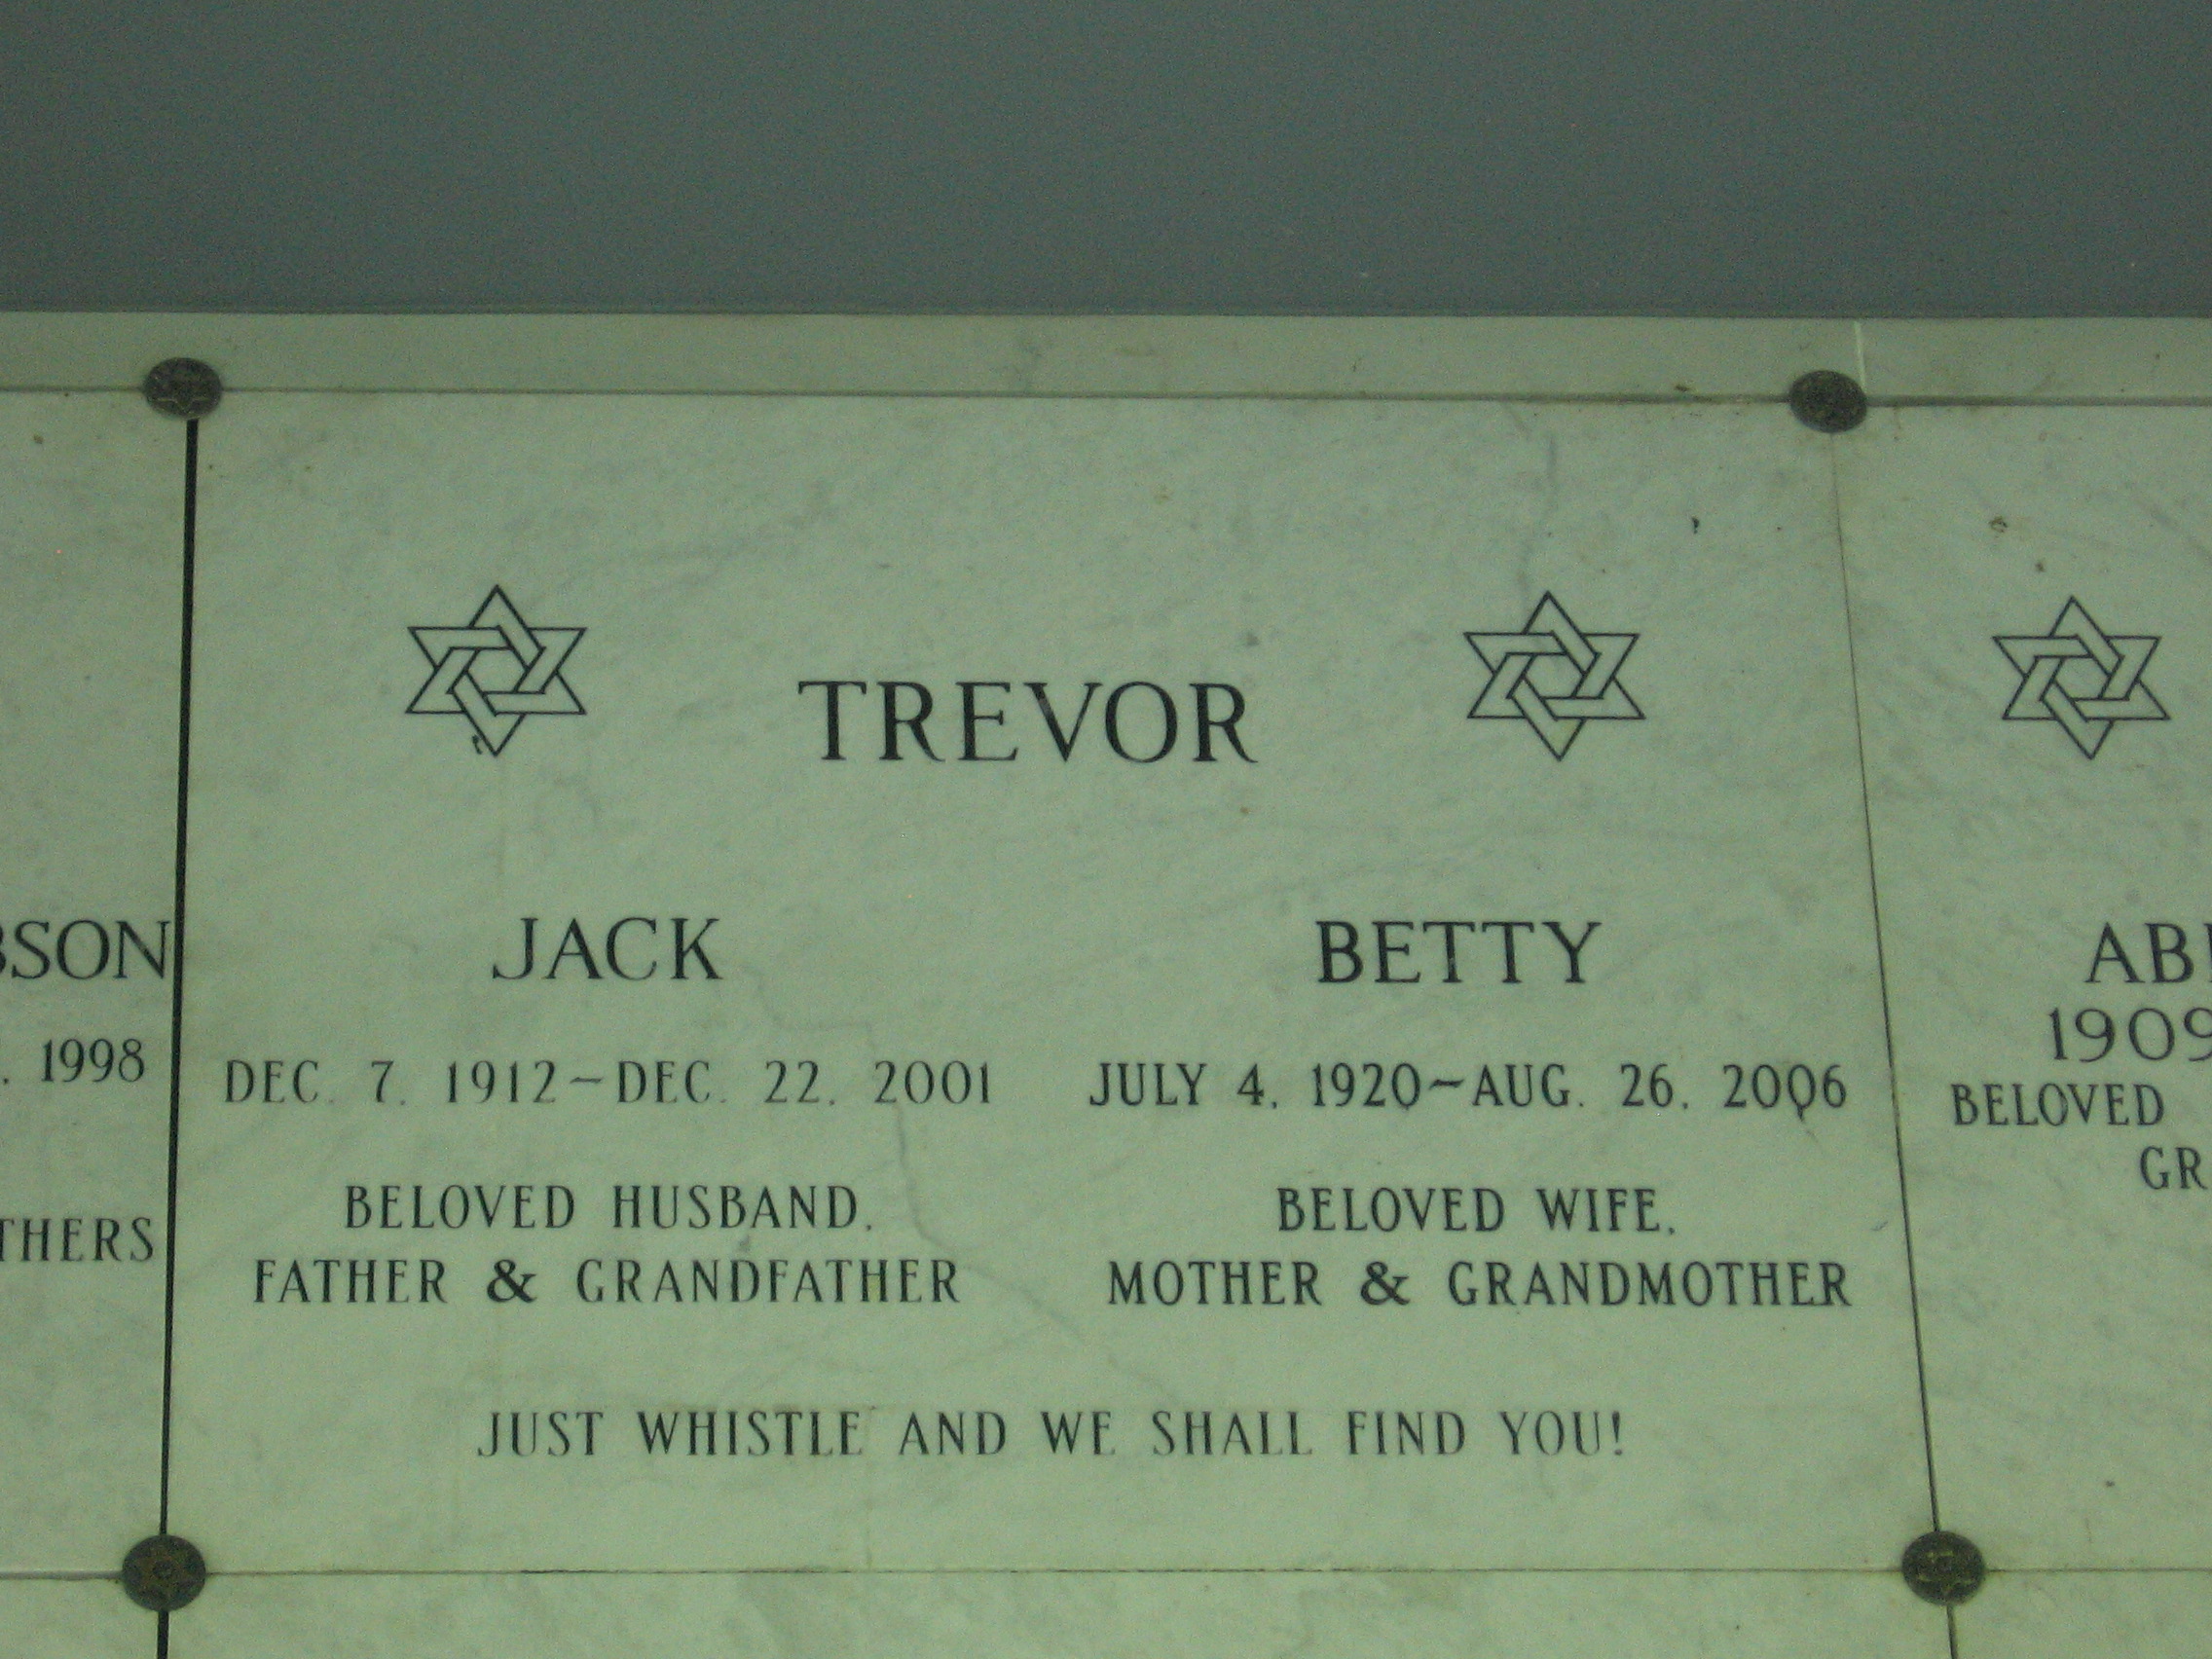 Jack Trevor